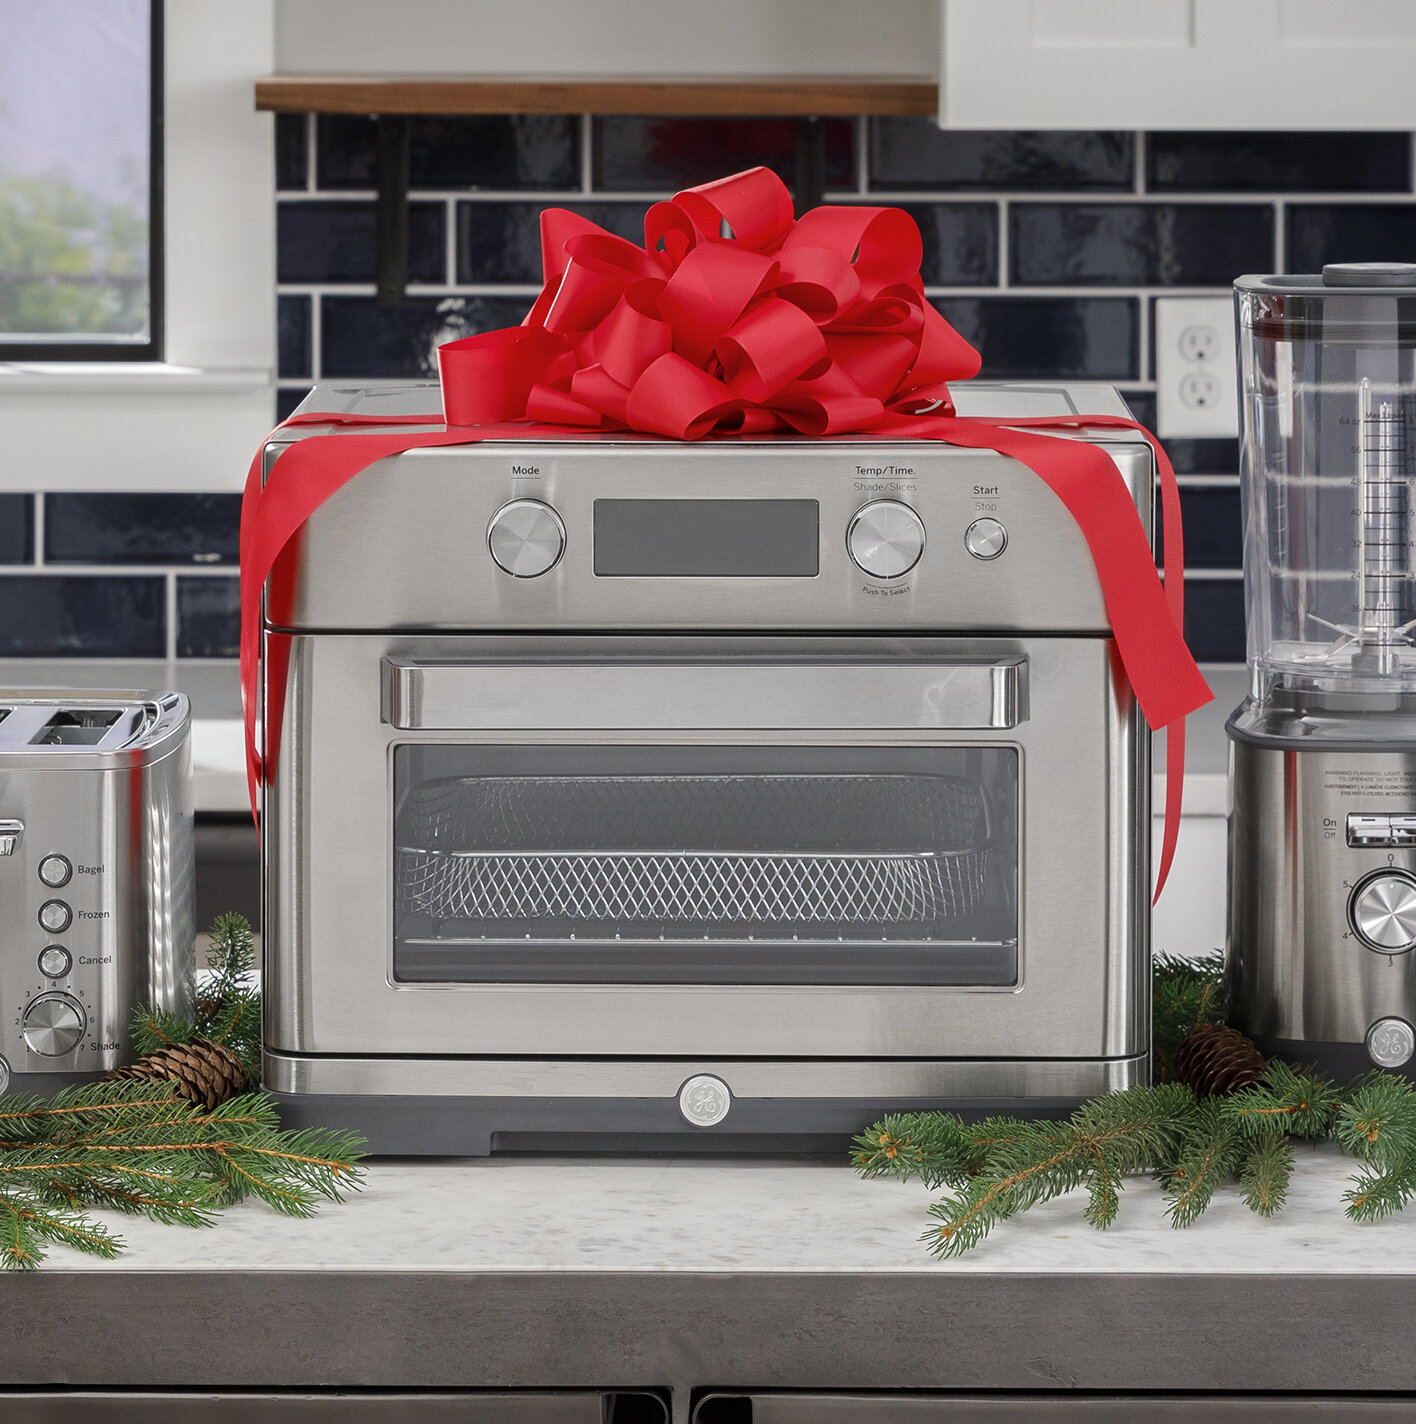 Ge Appliances Digital Air Fry 8 In 1 Toaster Oven Reviews Wayfair